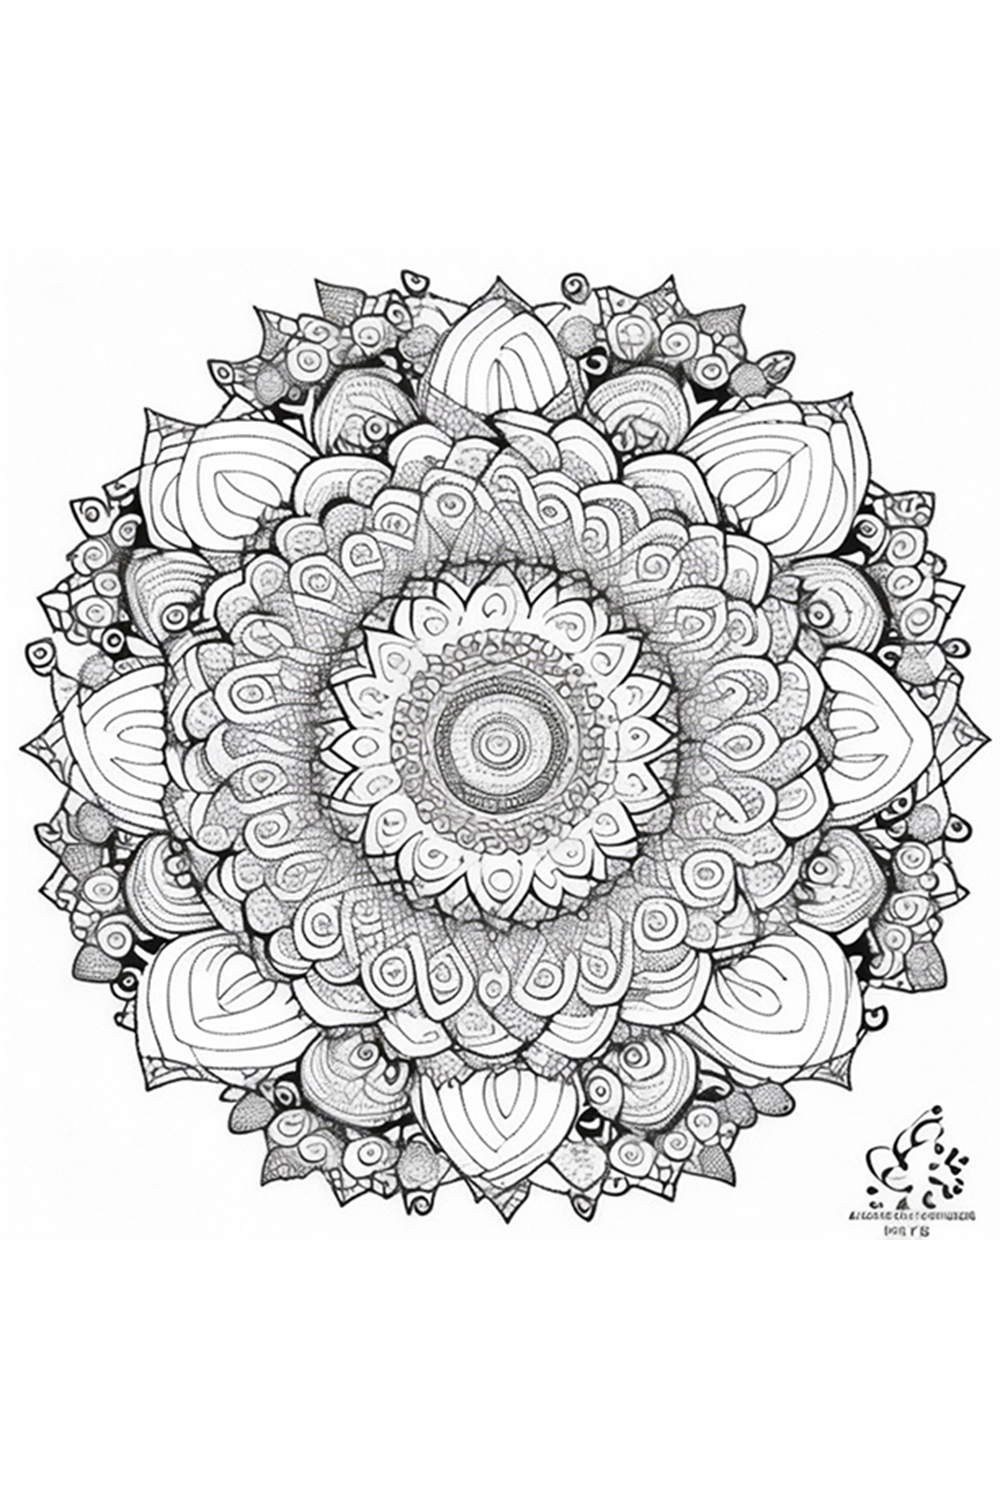 Maori Tribal Mandala Designs pinterest preview image.